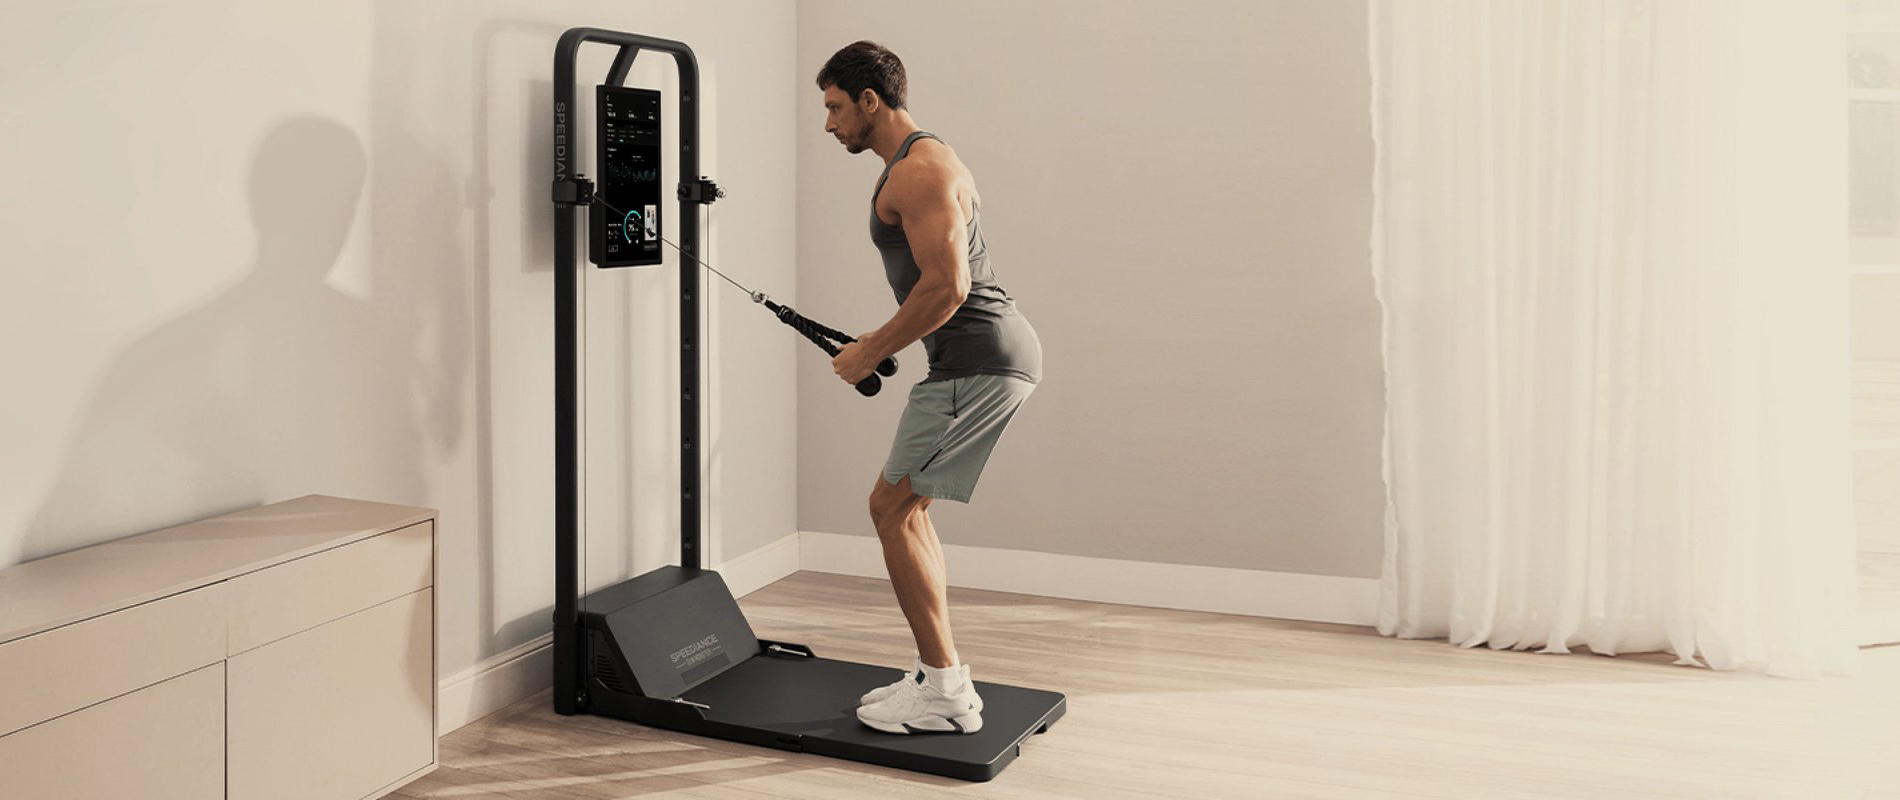 Speediance Smart Home Gym Equipment – A Review